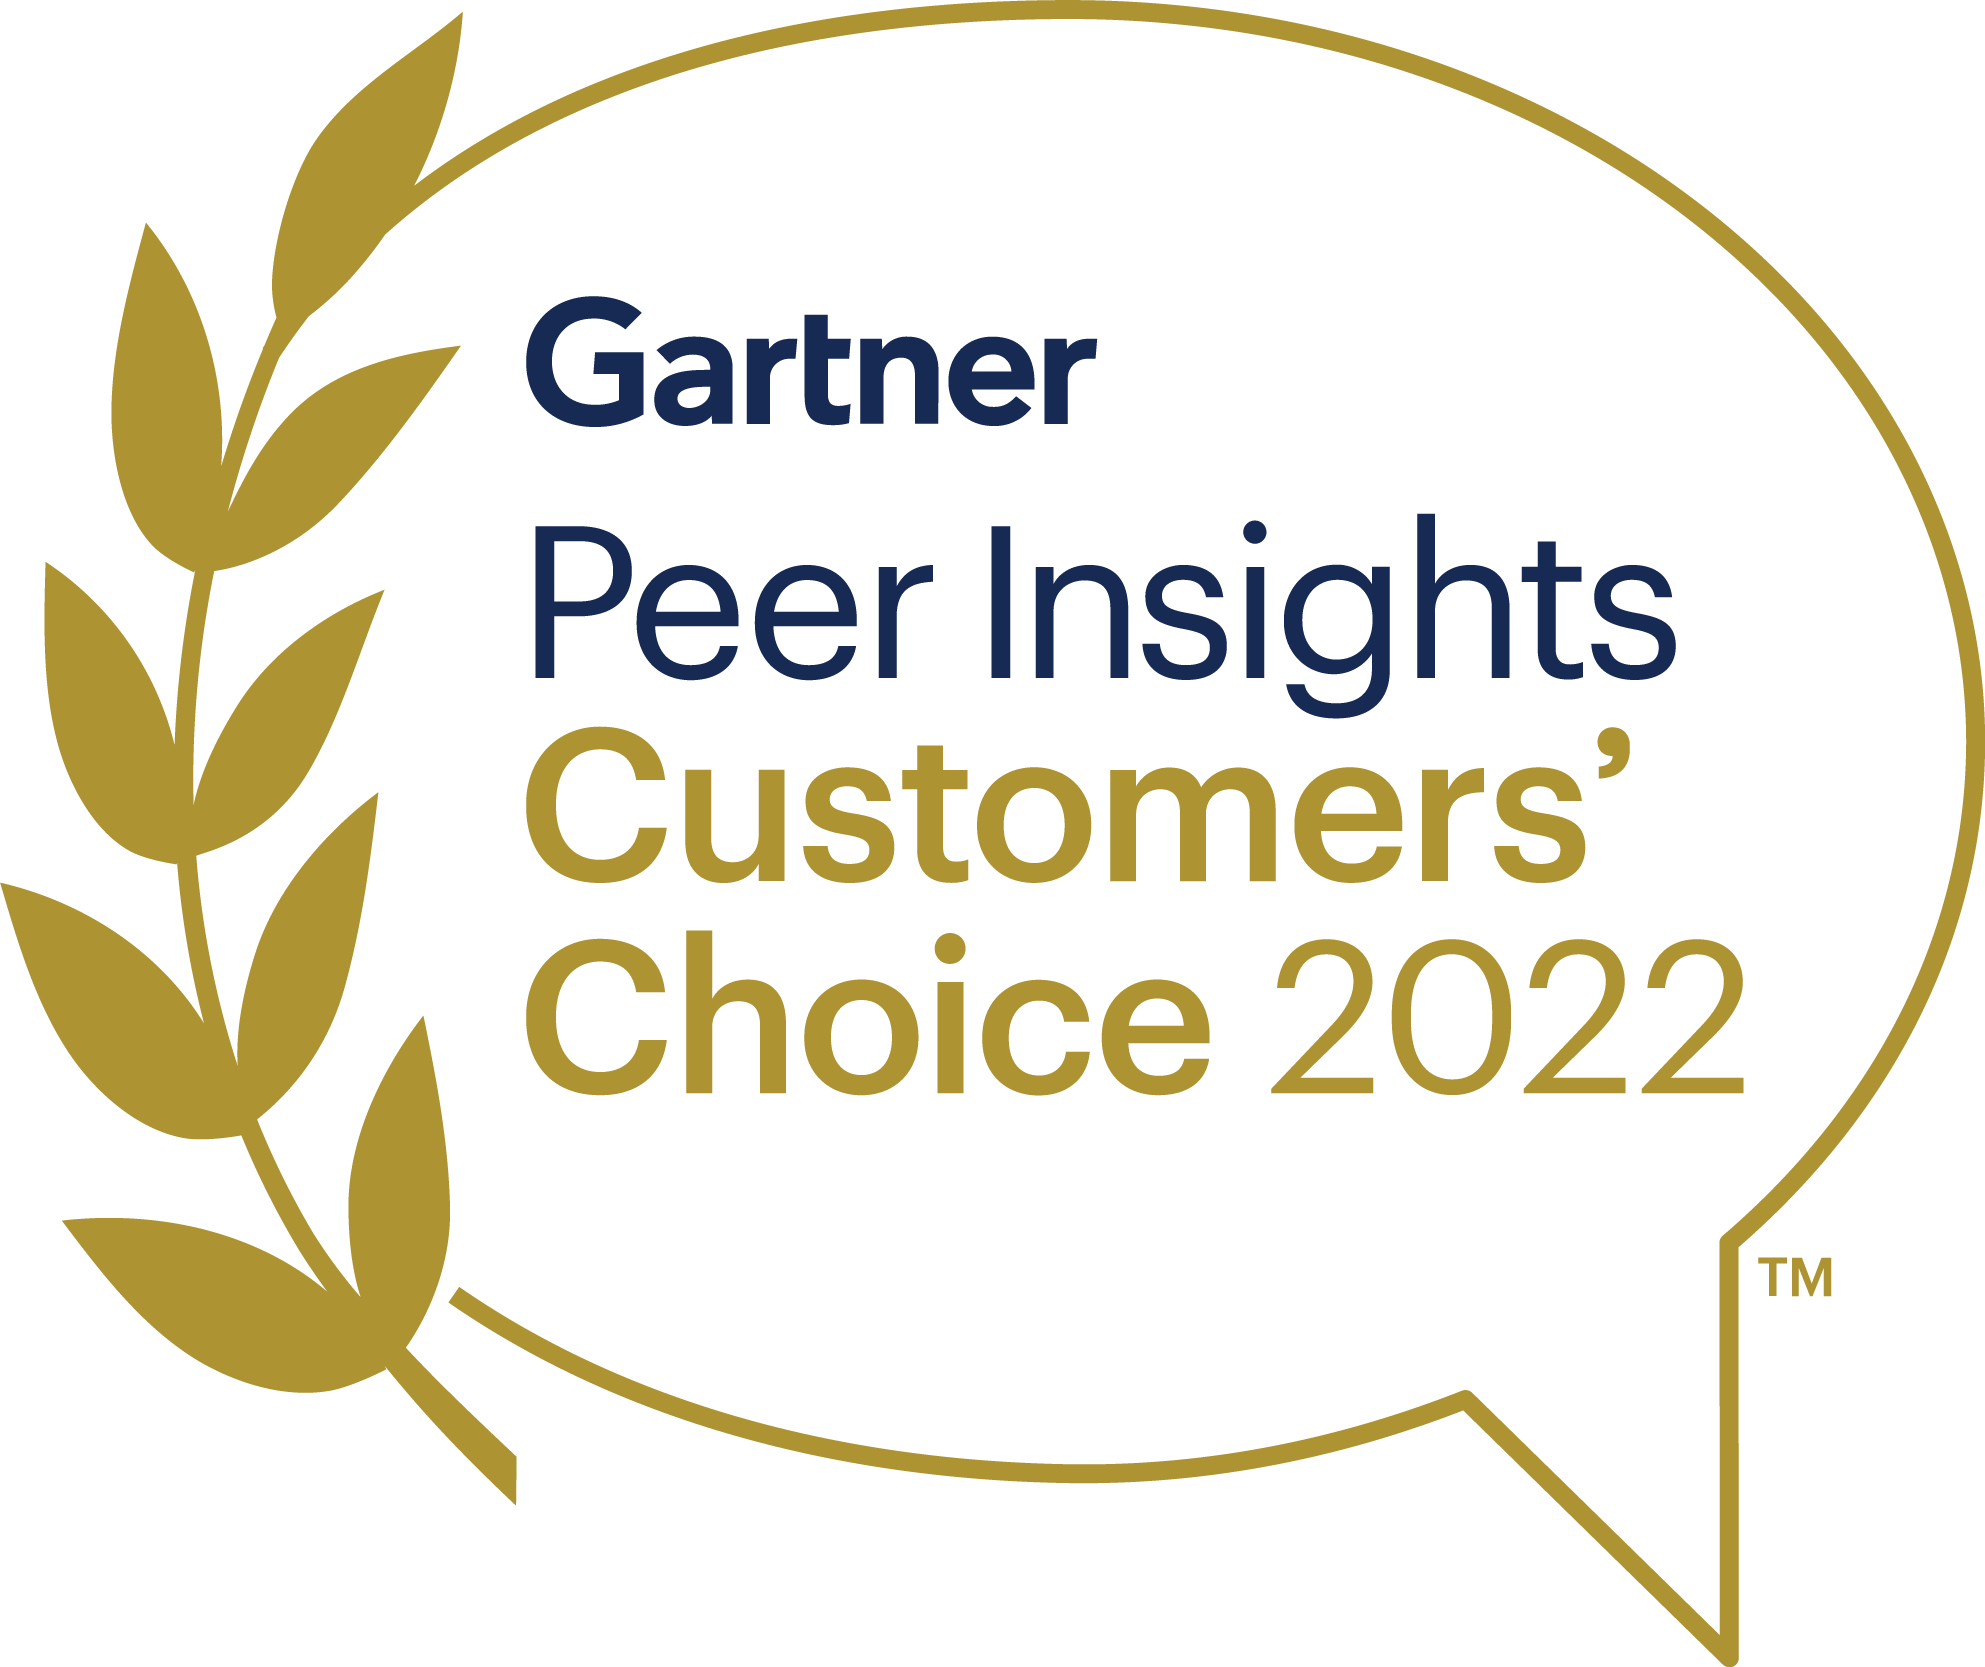 Gartner Peer Insights Customer Choice badge